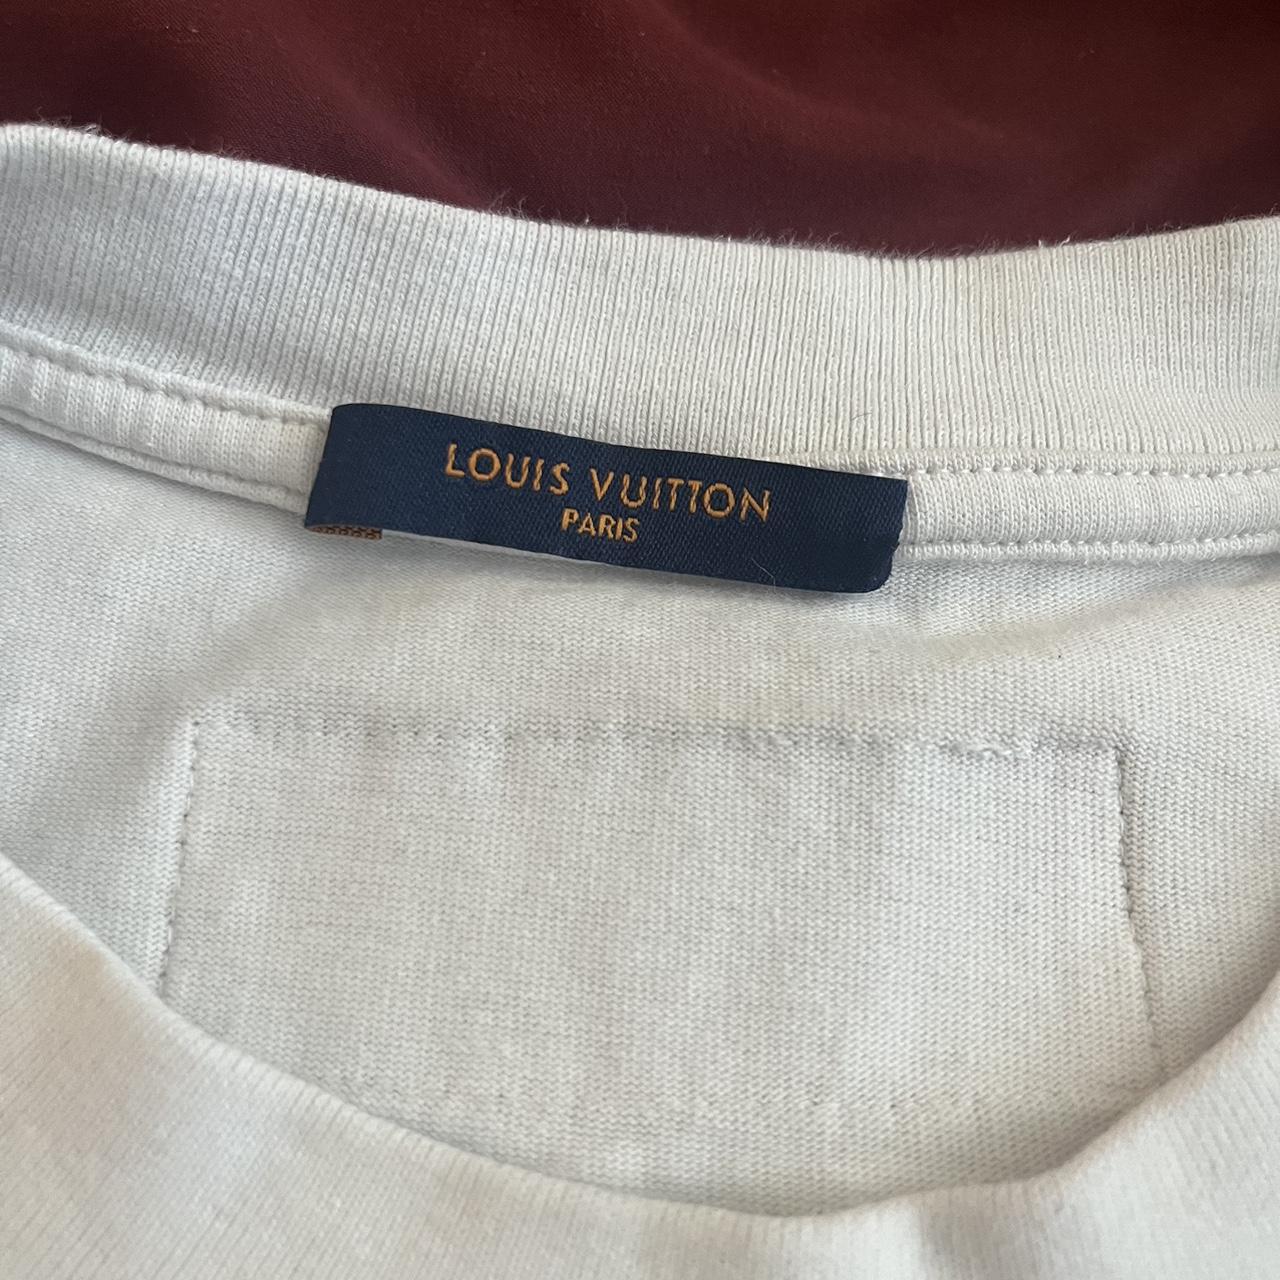 Louis Vuitton t-shirt. Doenst fit me so almost never - Depop